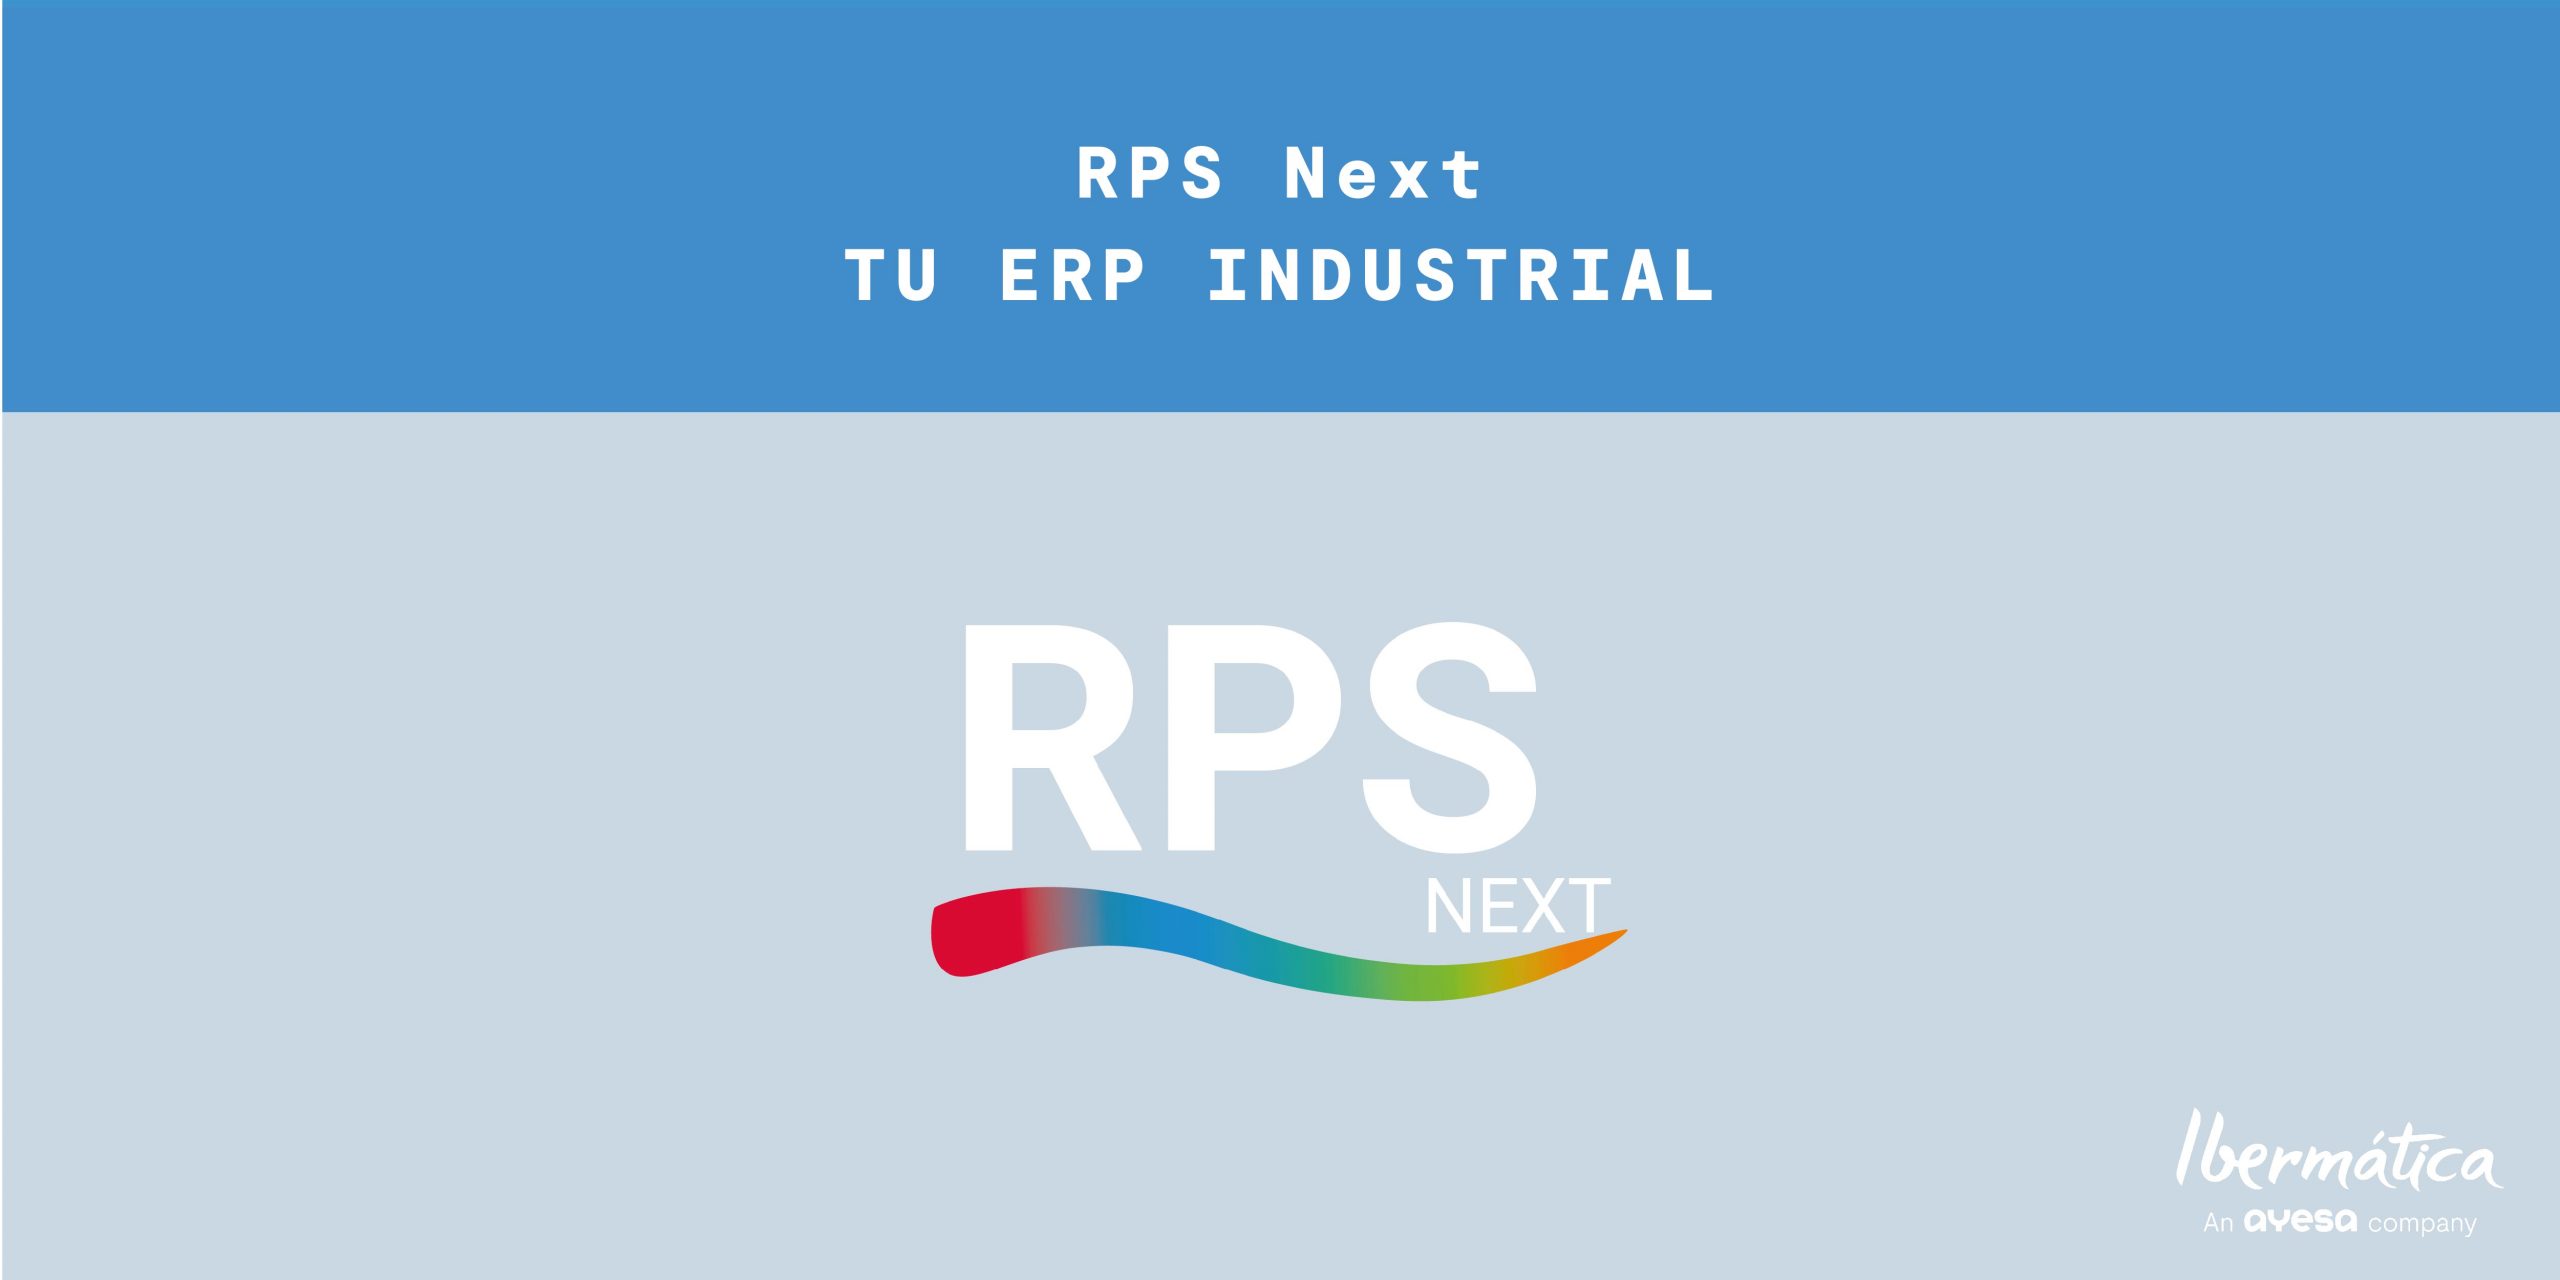 RPS NEXT. Tu ERP Industrial.